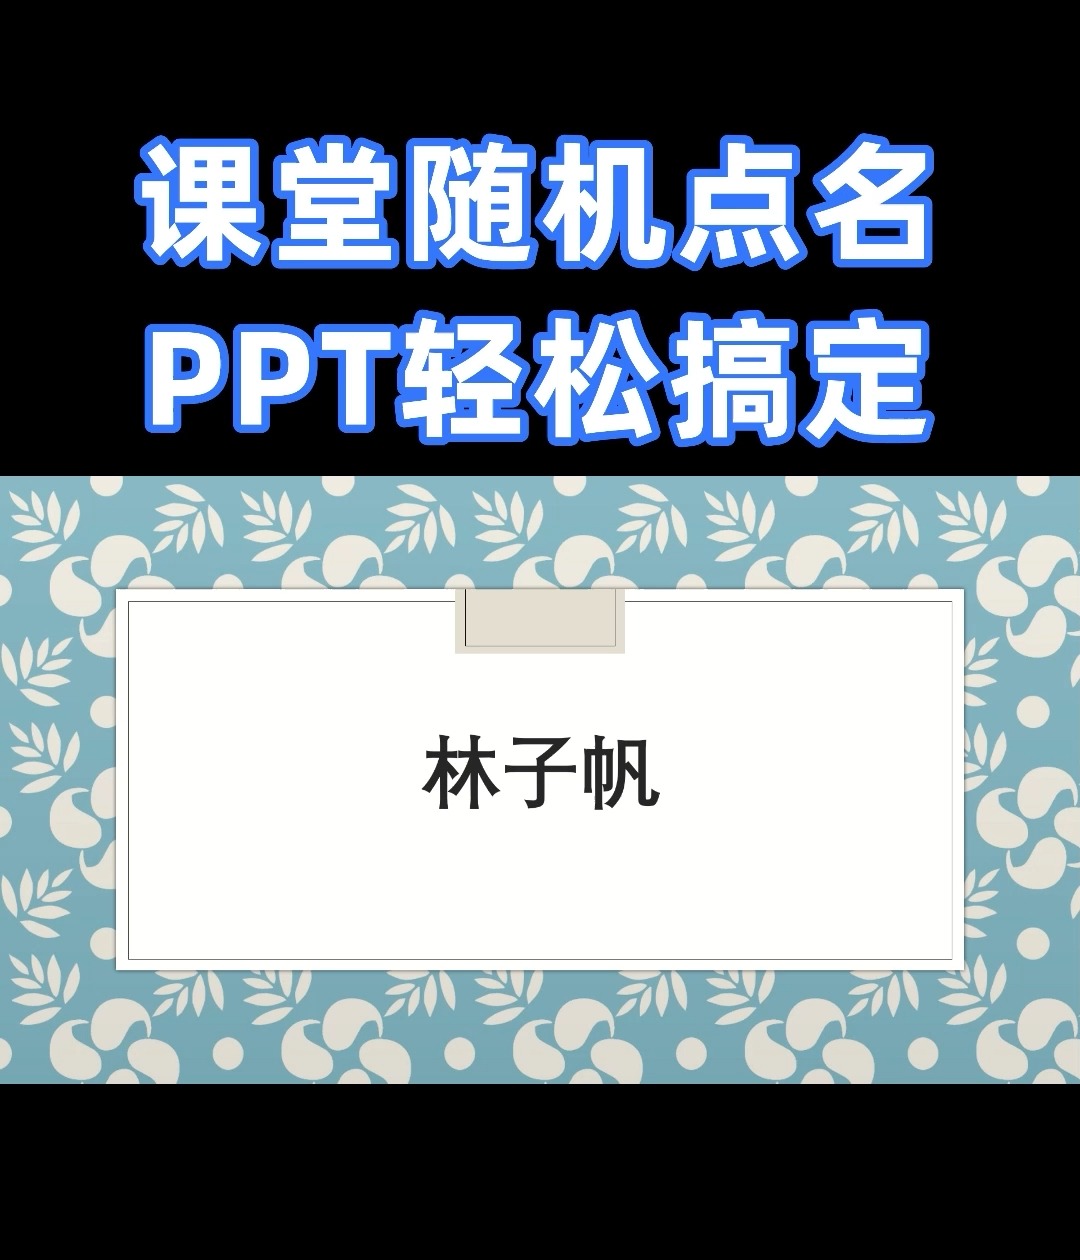 PPT - 随机抽样习题课 PowerPoint Presentation, free download - ID:6041110